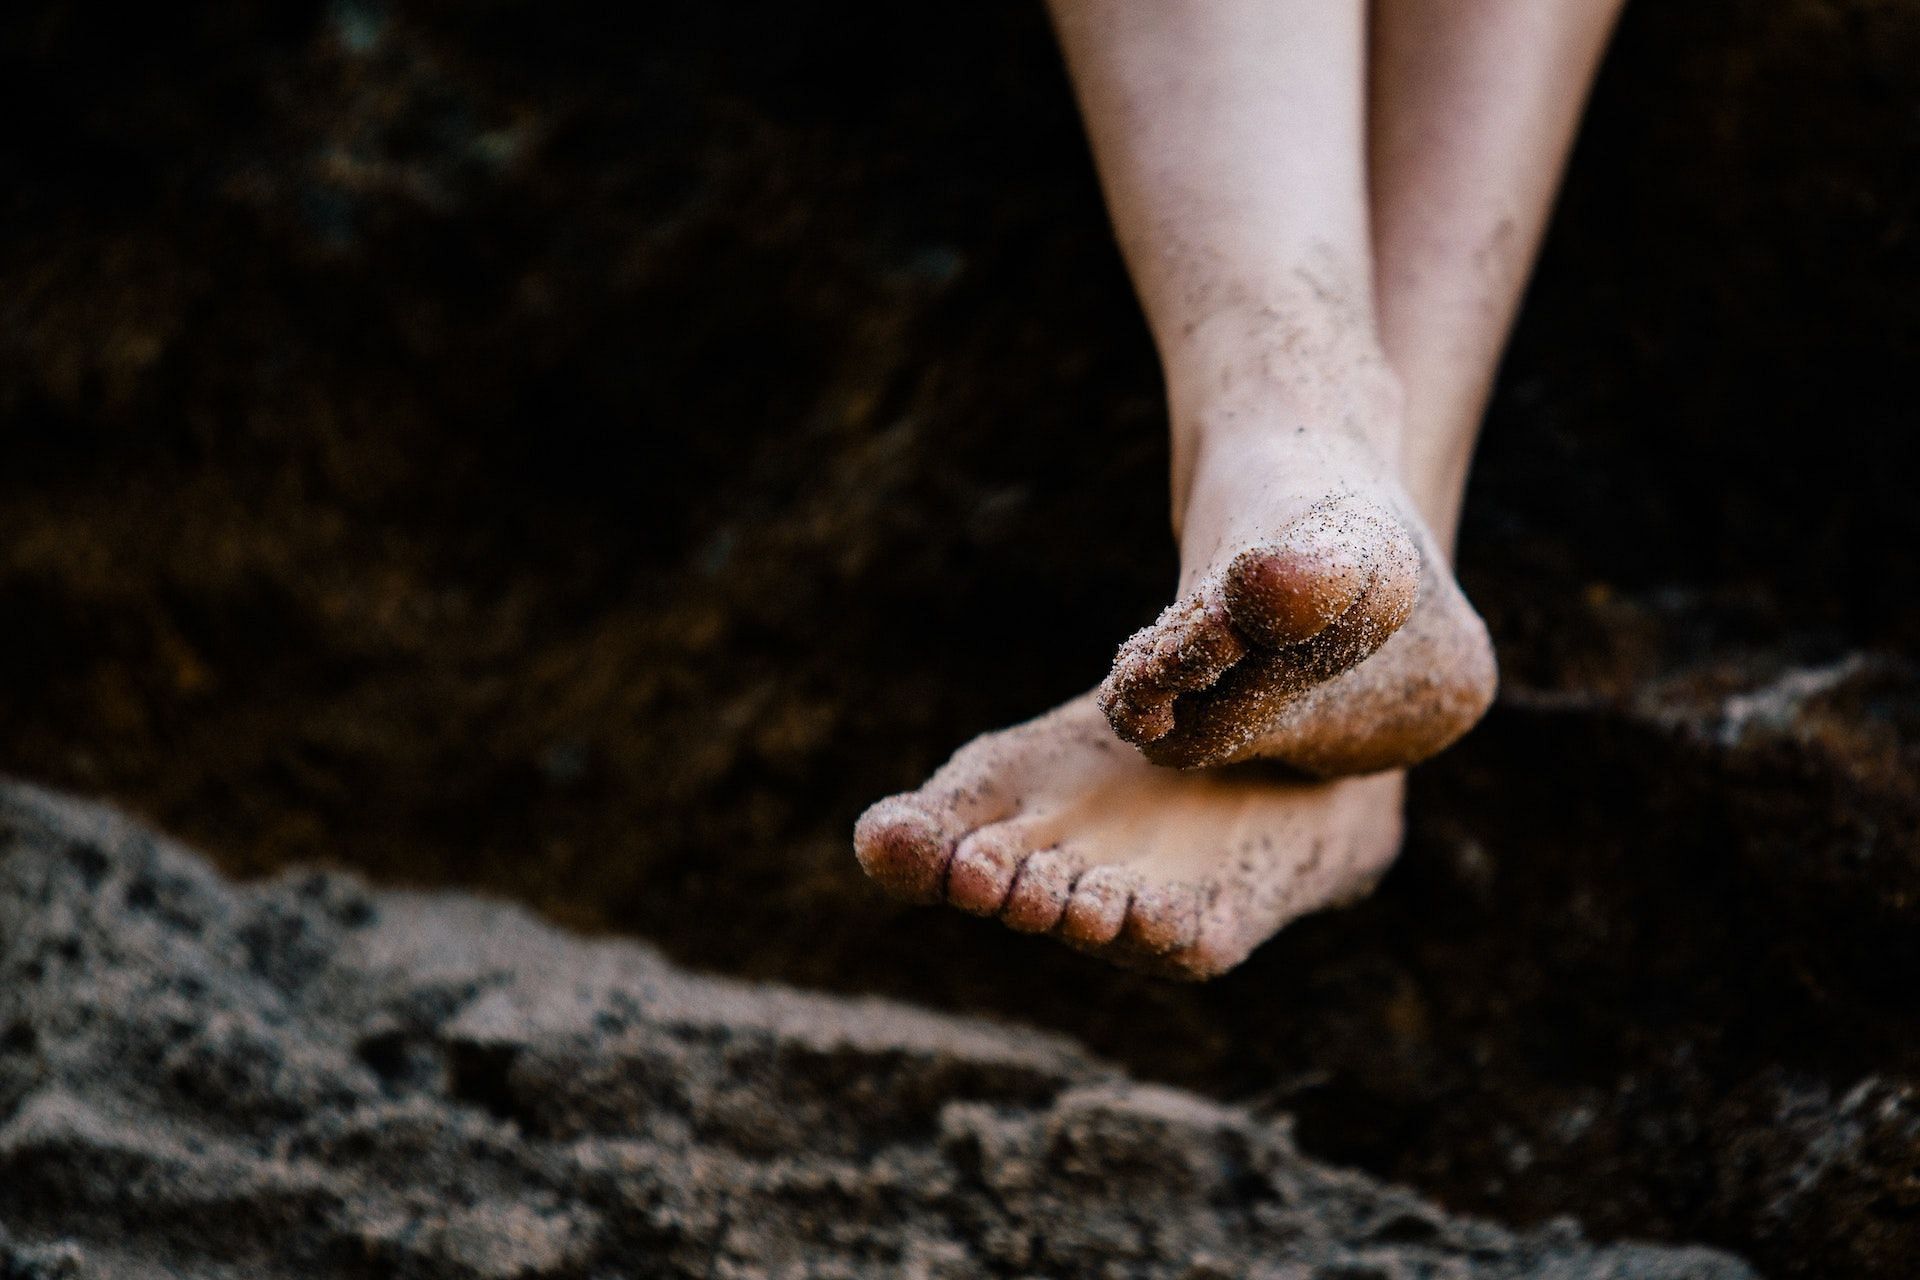 Walking barefoot on moist areas increase risks of warts. (Photo via Pexels/Isaac Taylor)